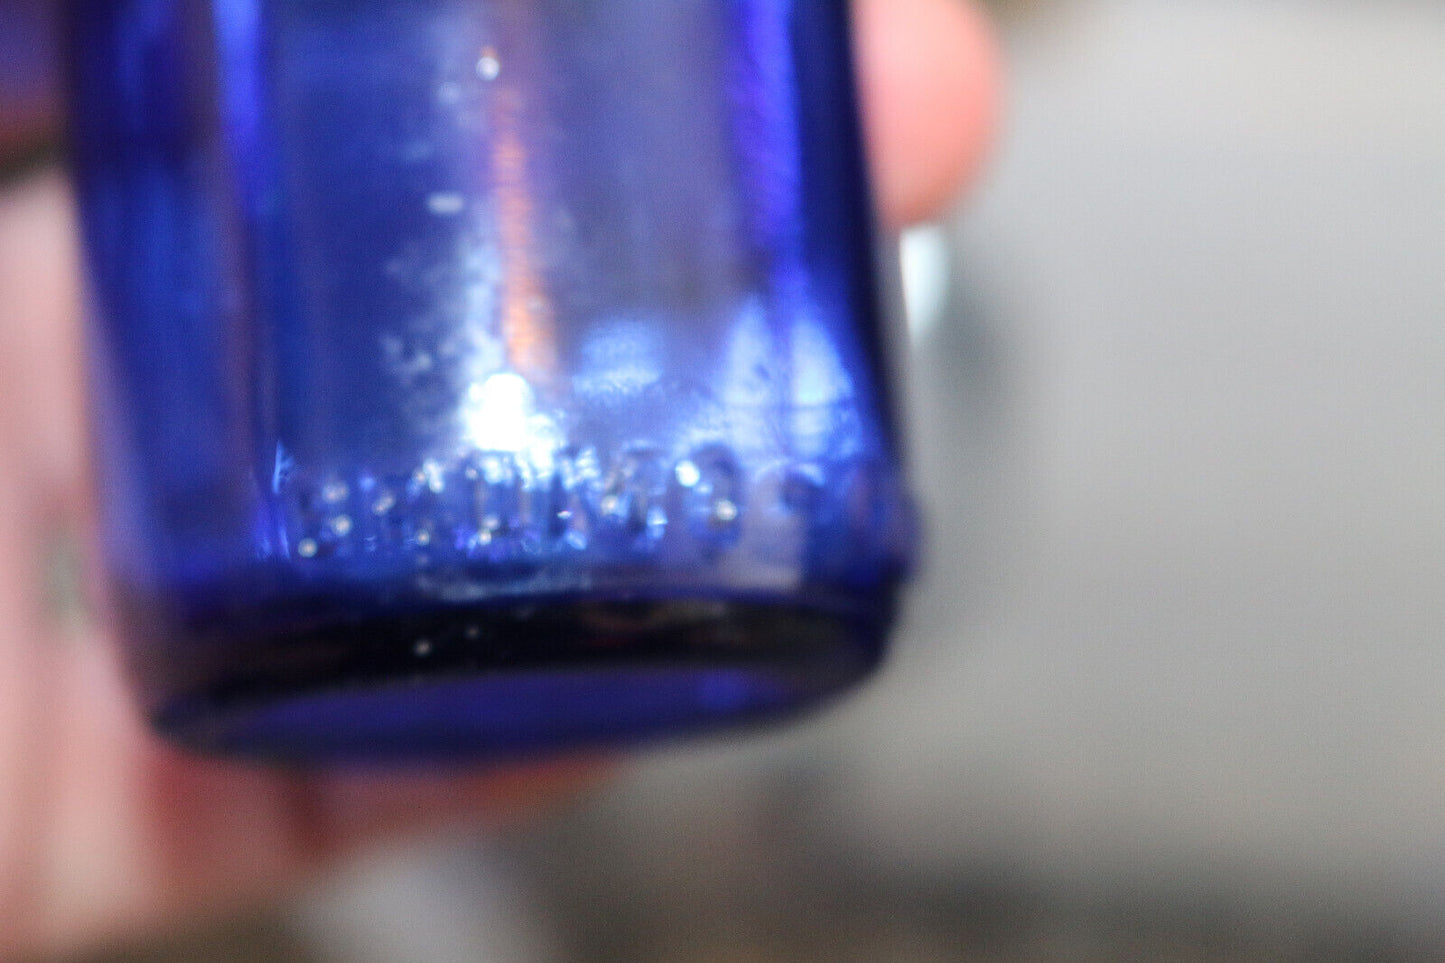 Vintage Bromo-Cedin Cobalt Blue Glass Bottle 5-1/2" H Embossed For Headaches